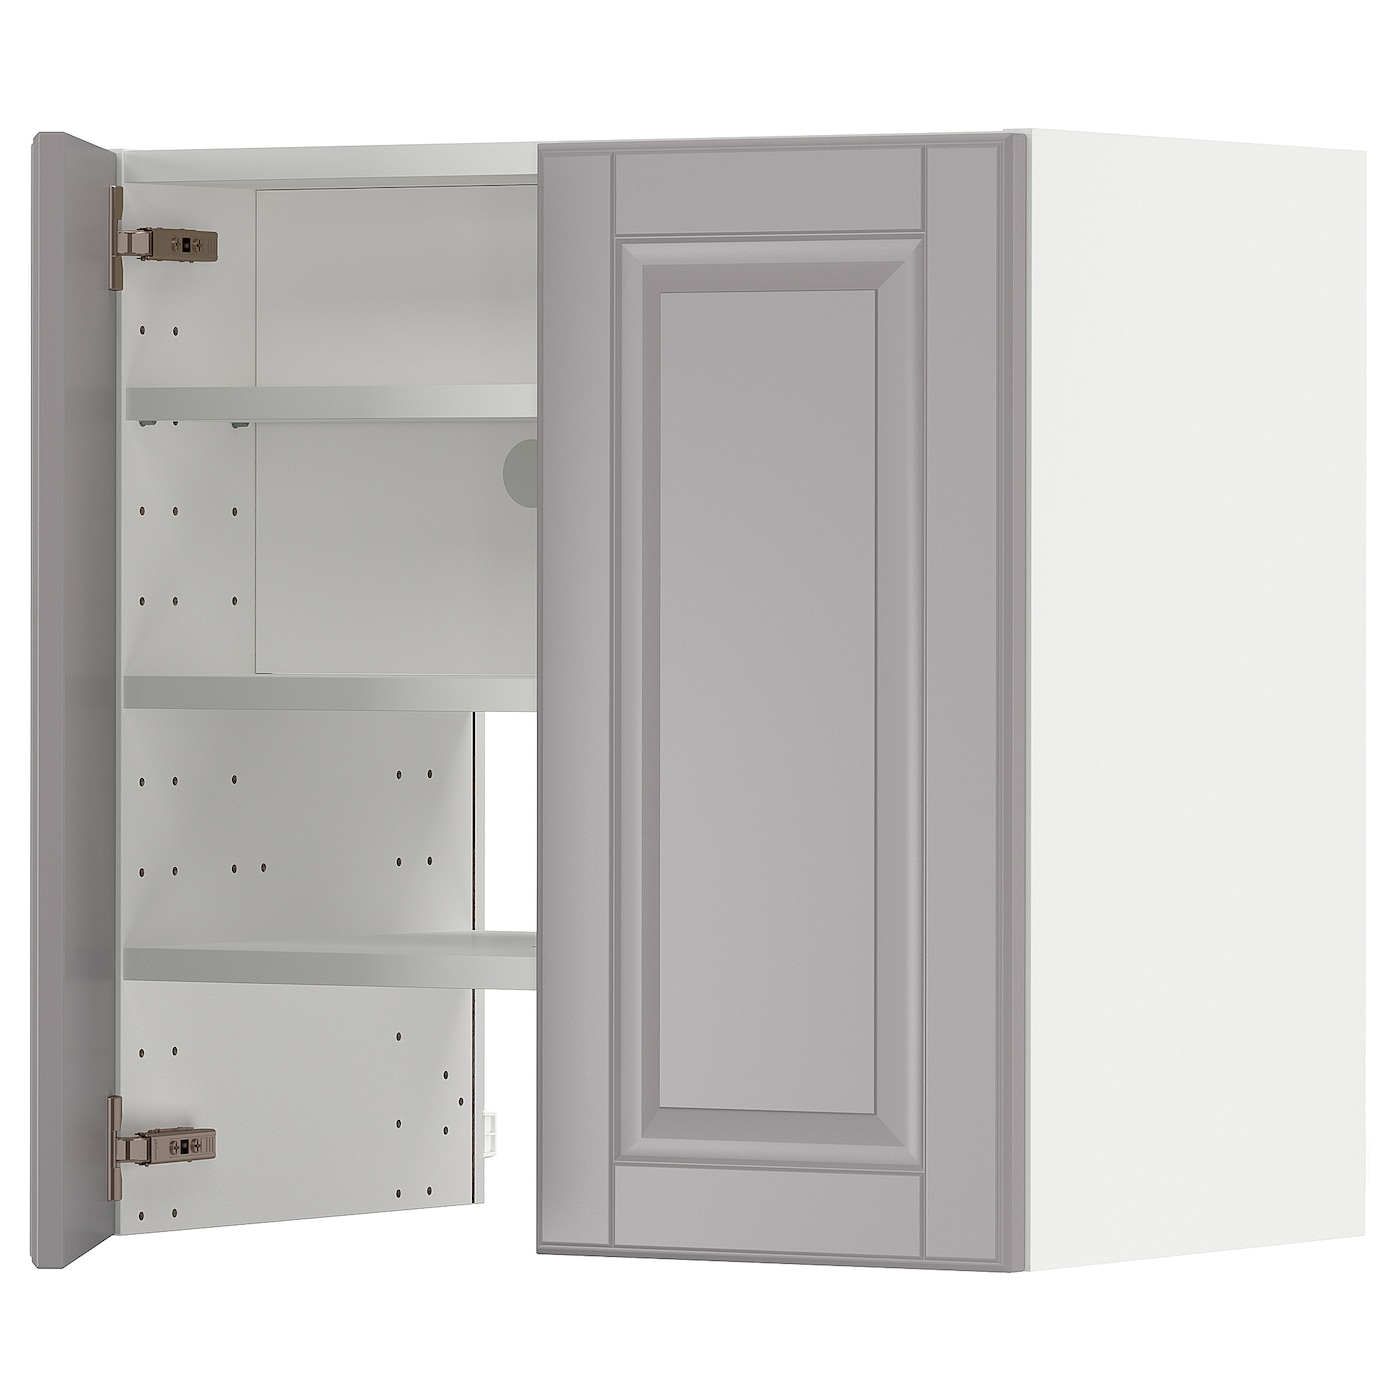 METOD Навесной шкаф - METOD IKEA/ МЕТОД ИКЕА, 60х60 см, белый/серый